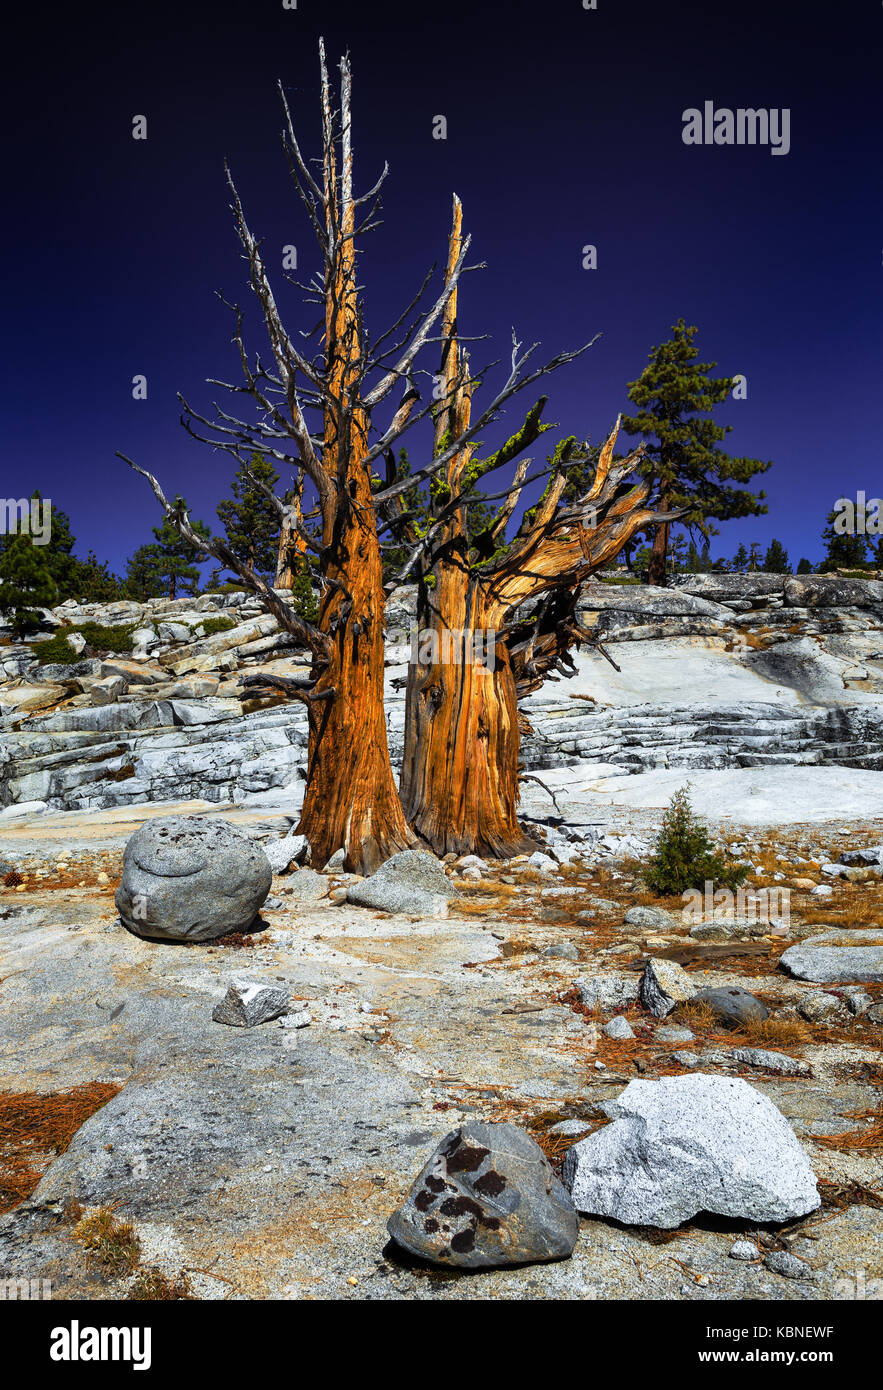 Unusual Tree and rocks Yosemite National Park Stock Photo